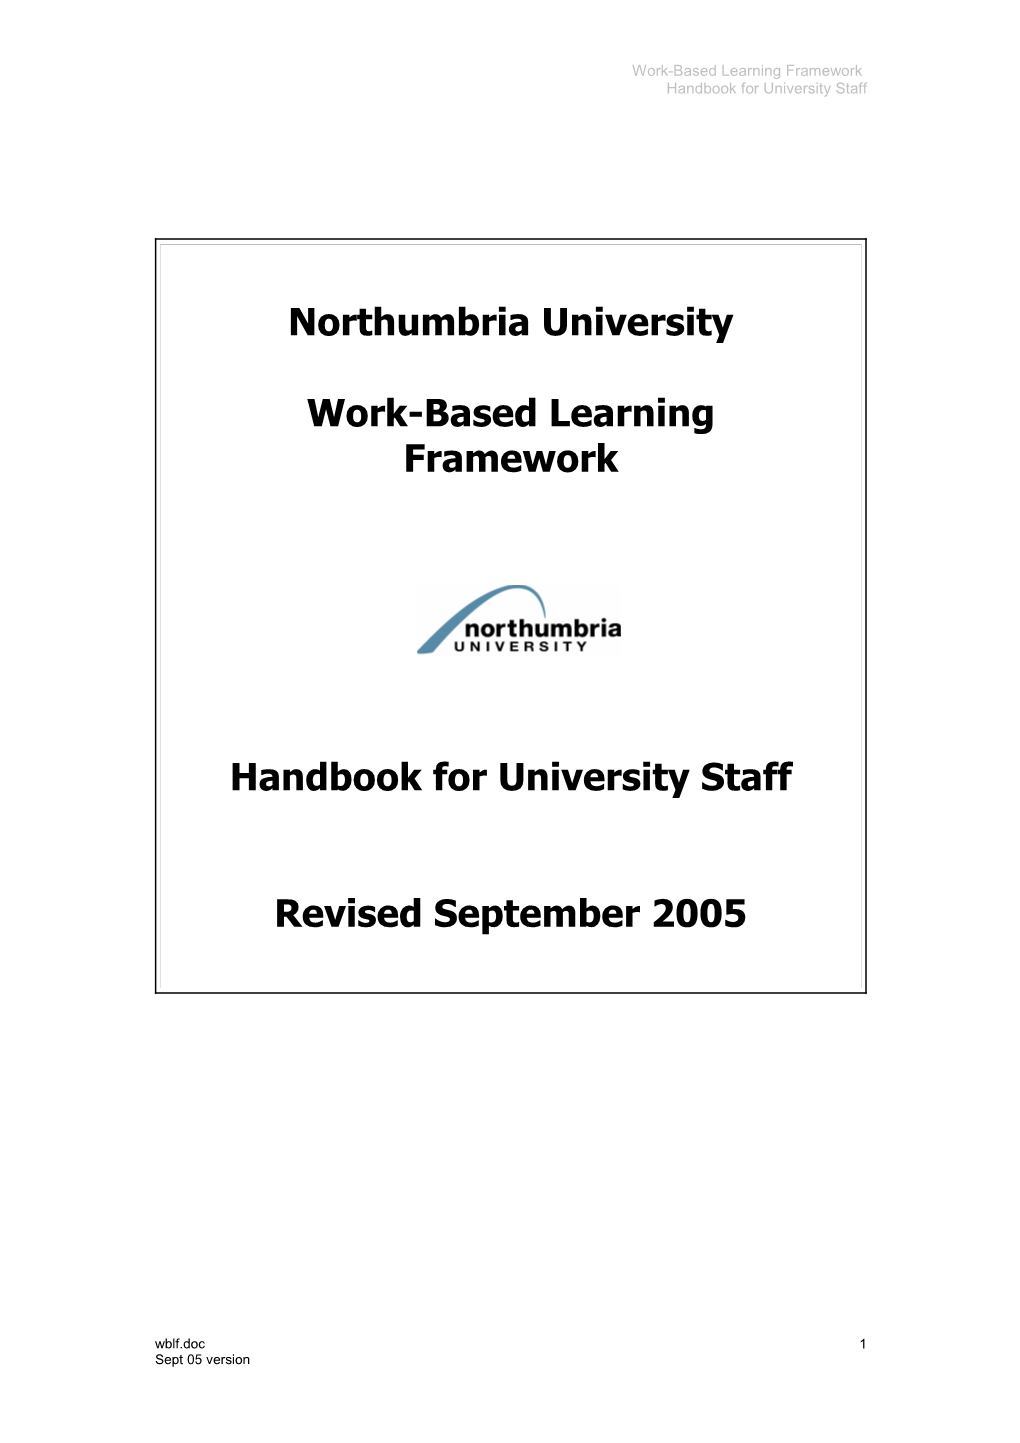 Negotiated Work-Based Learning Framework (NWBLF)